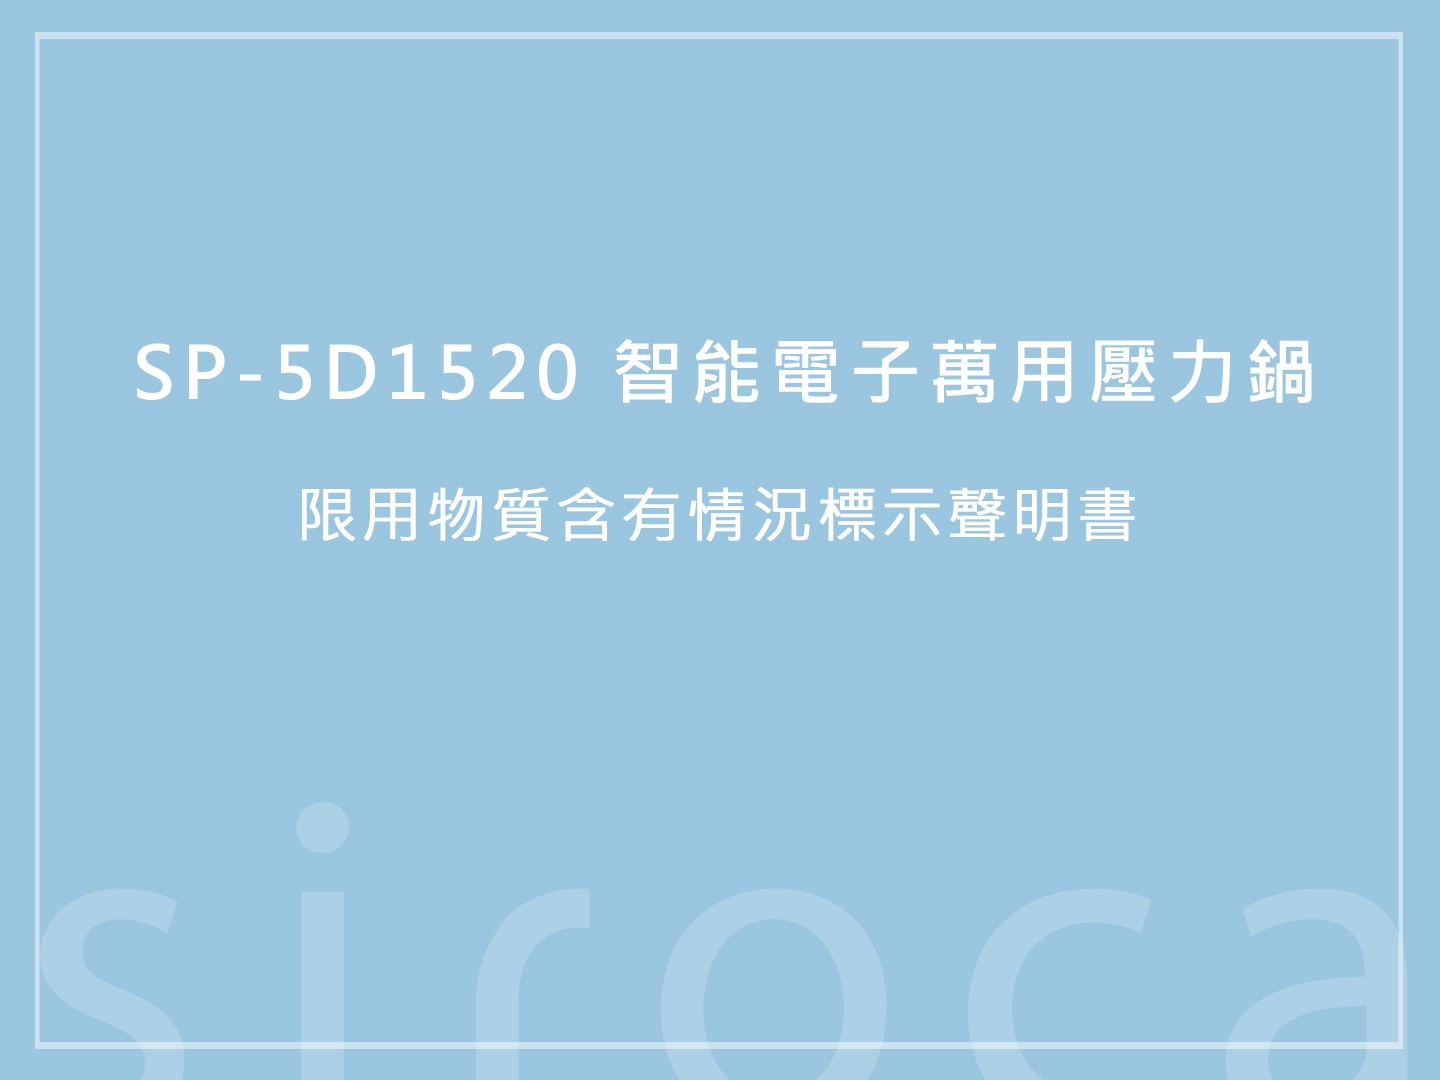 SP-5D1520 智能電子萬用壓力鍋 限用物質含有情況標示聲明